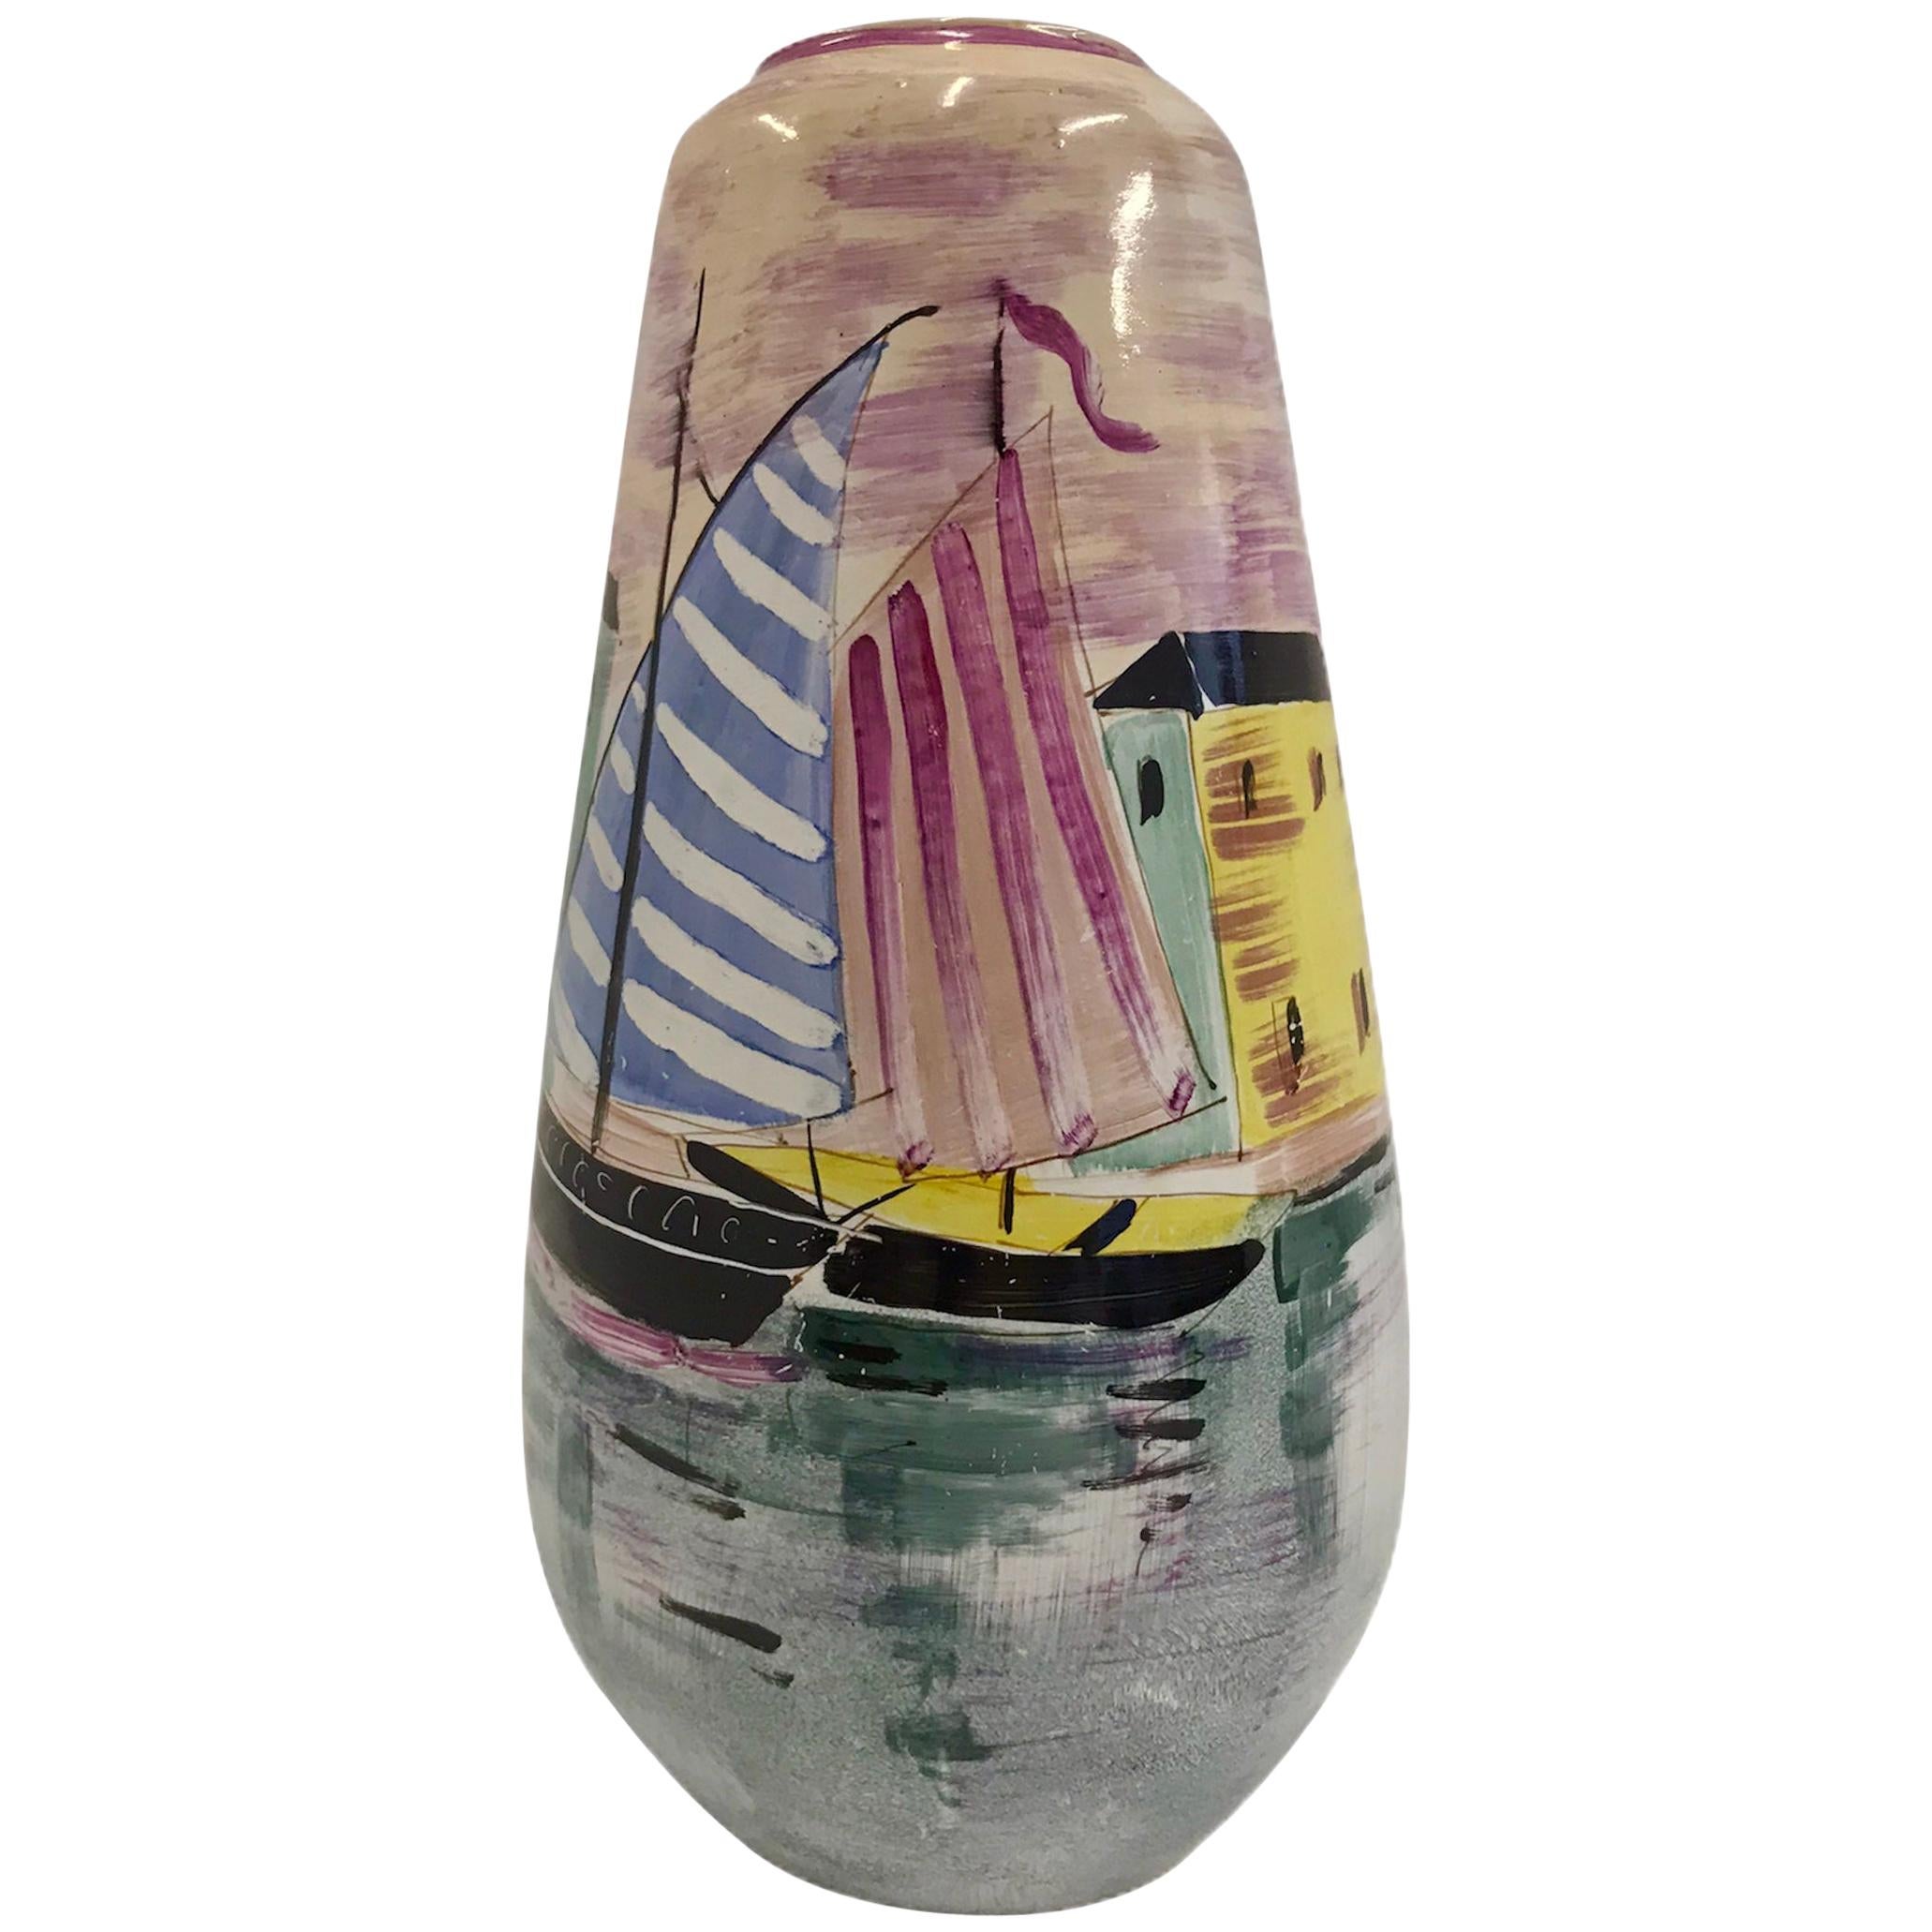 Italian Mid-Century Modern Pottery Vase Nautical Motif with Boats, 1960s